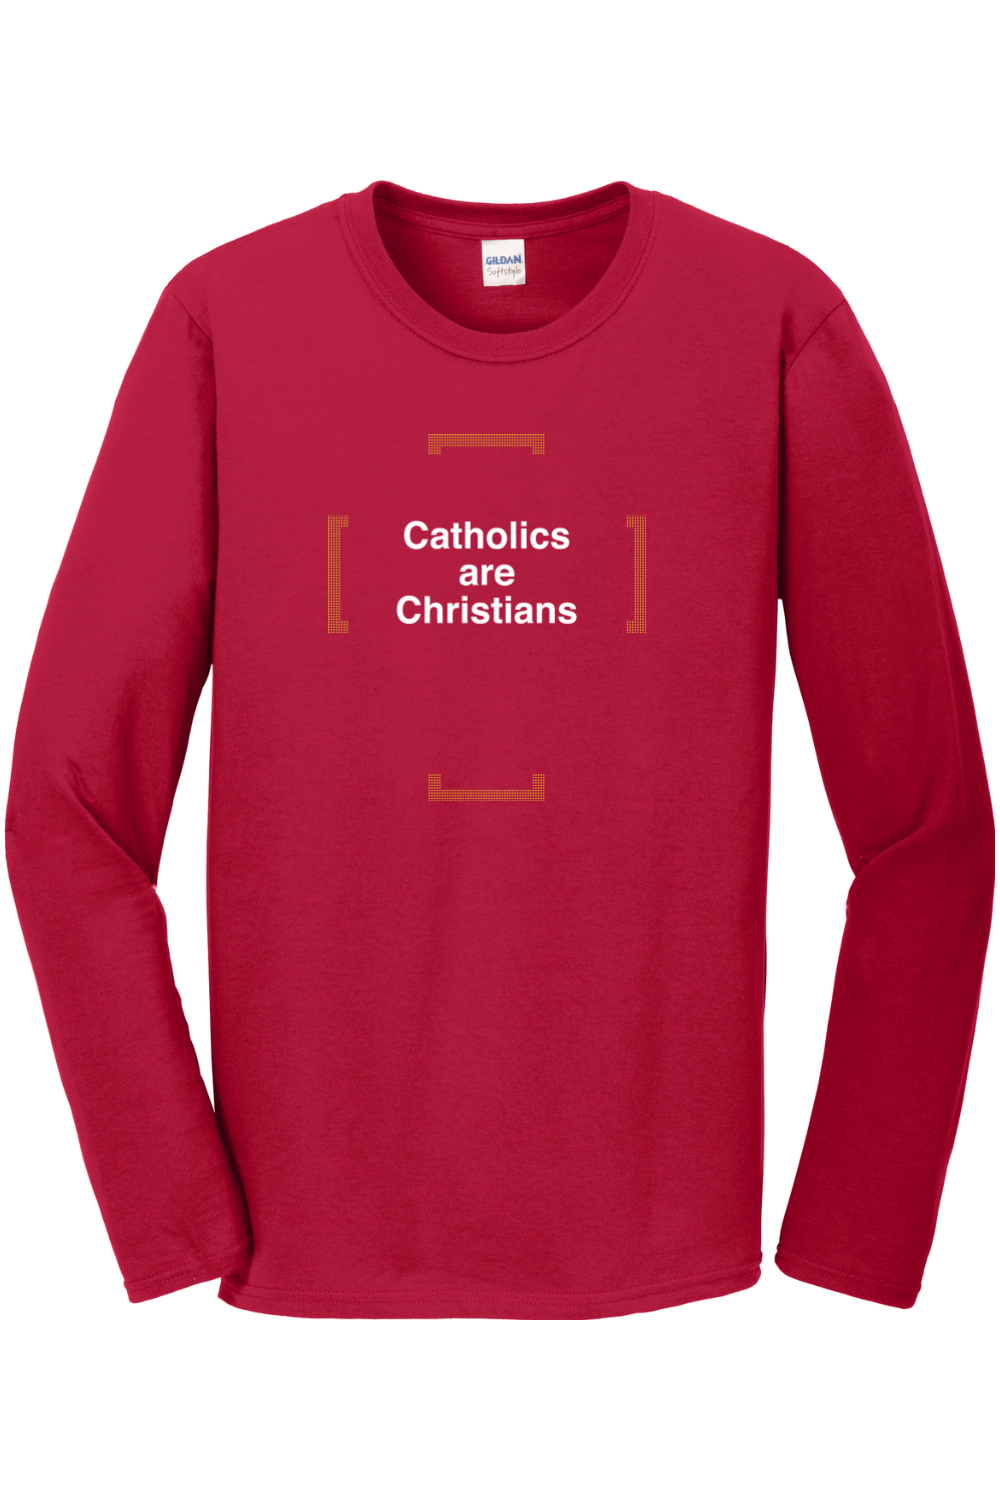 Catholics are Christians – Catholics are Christians Long Sleeve